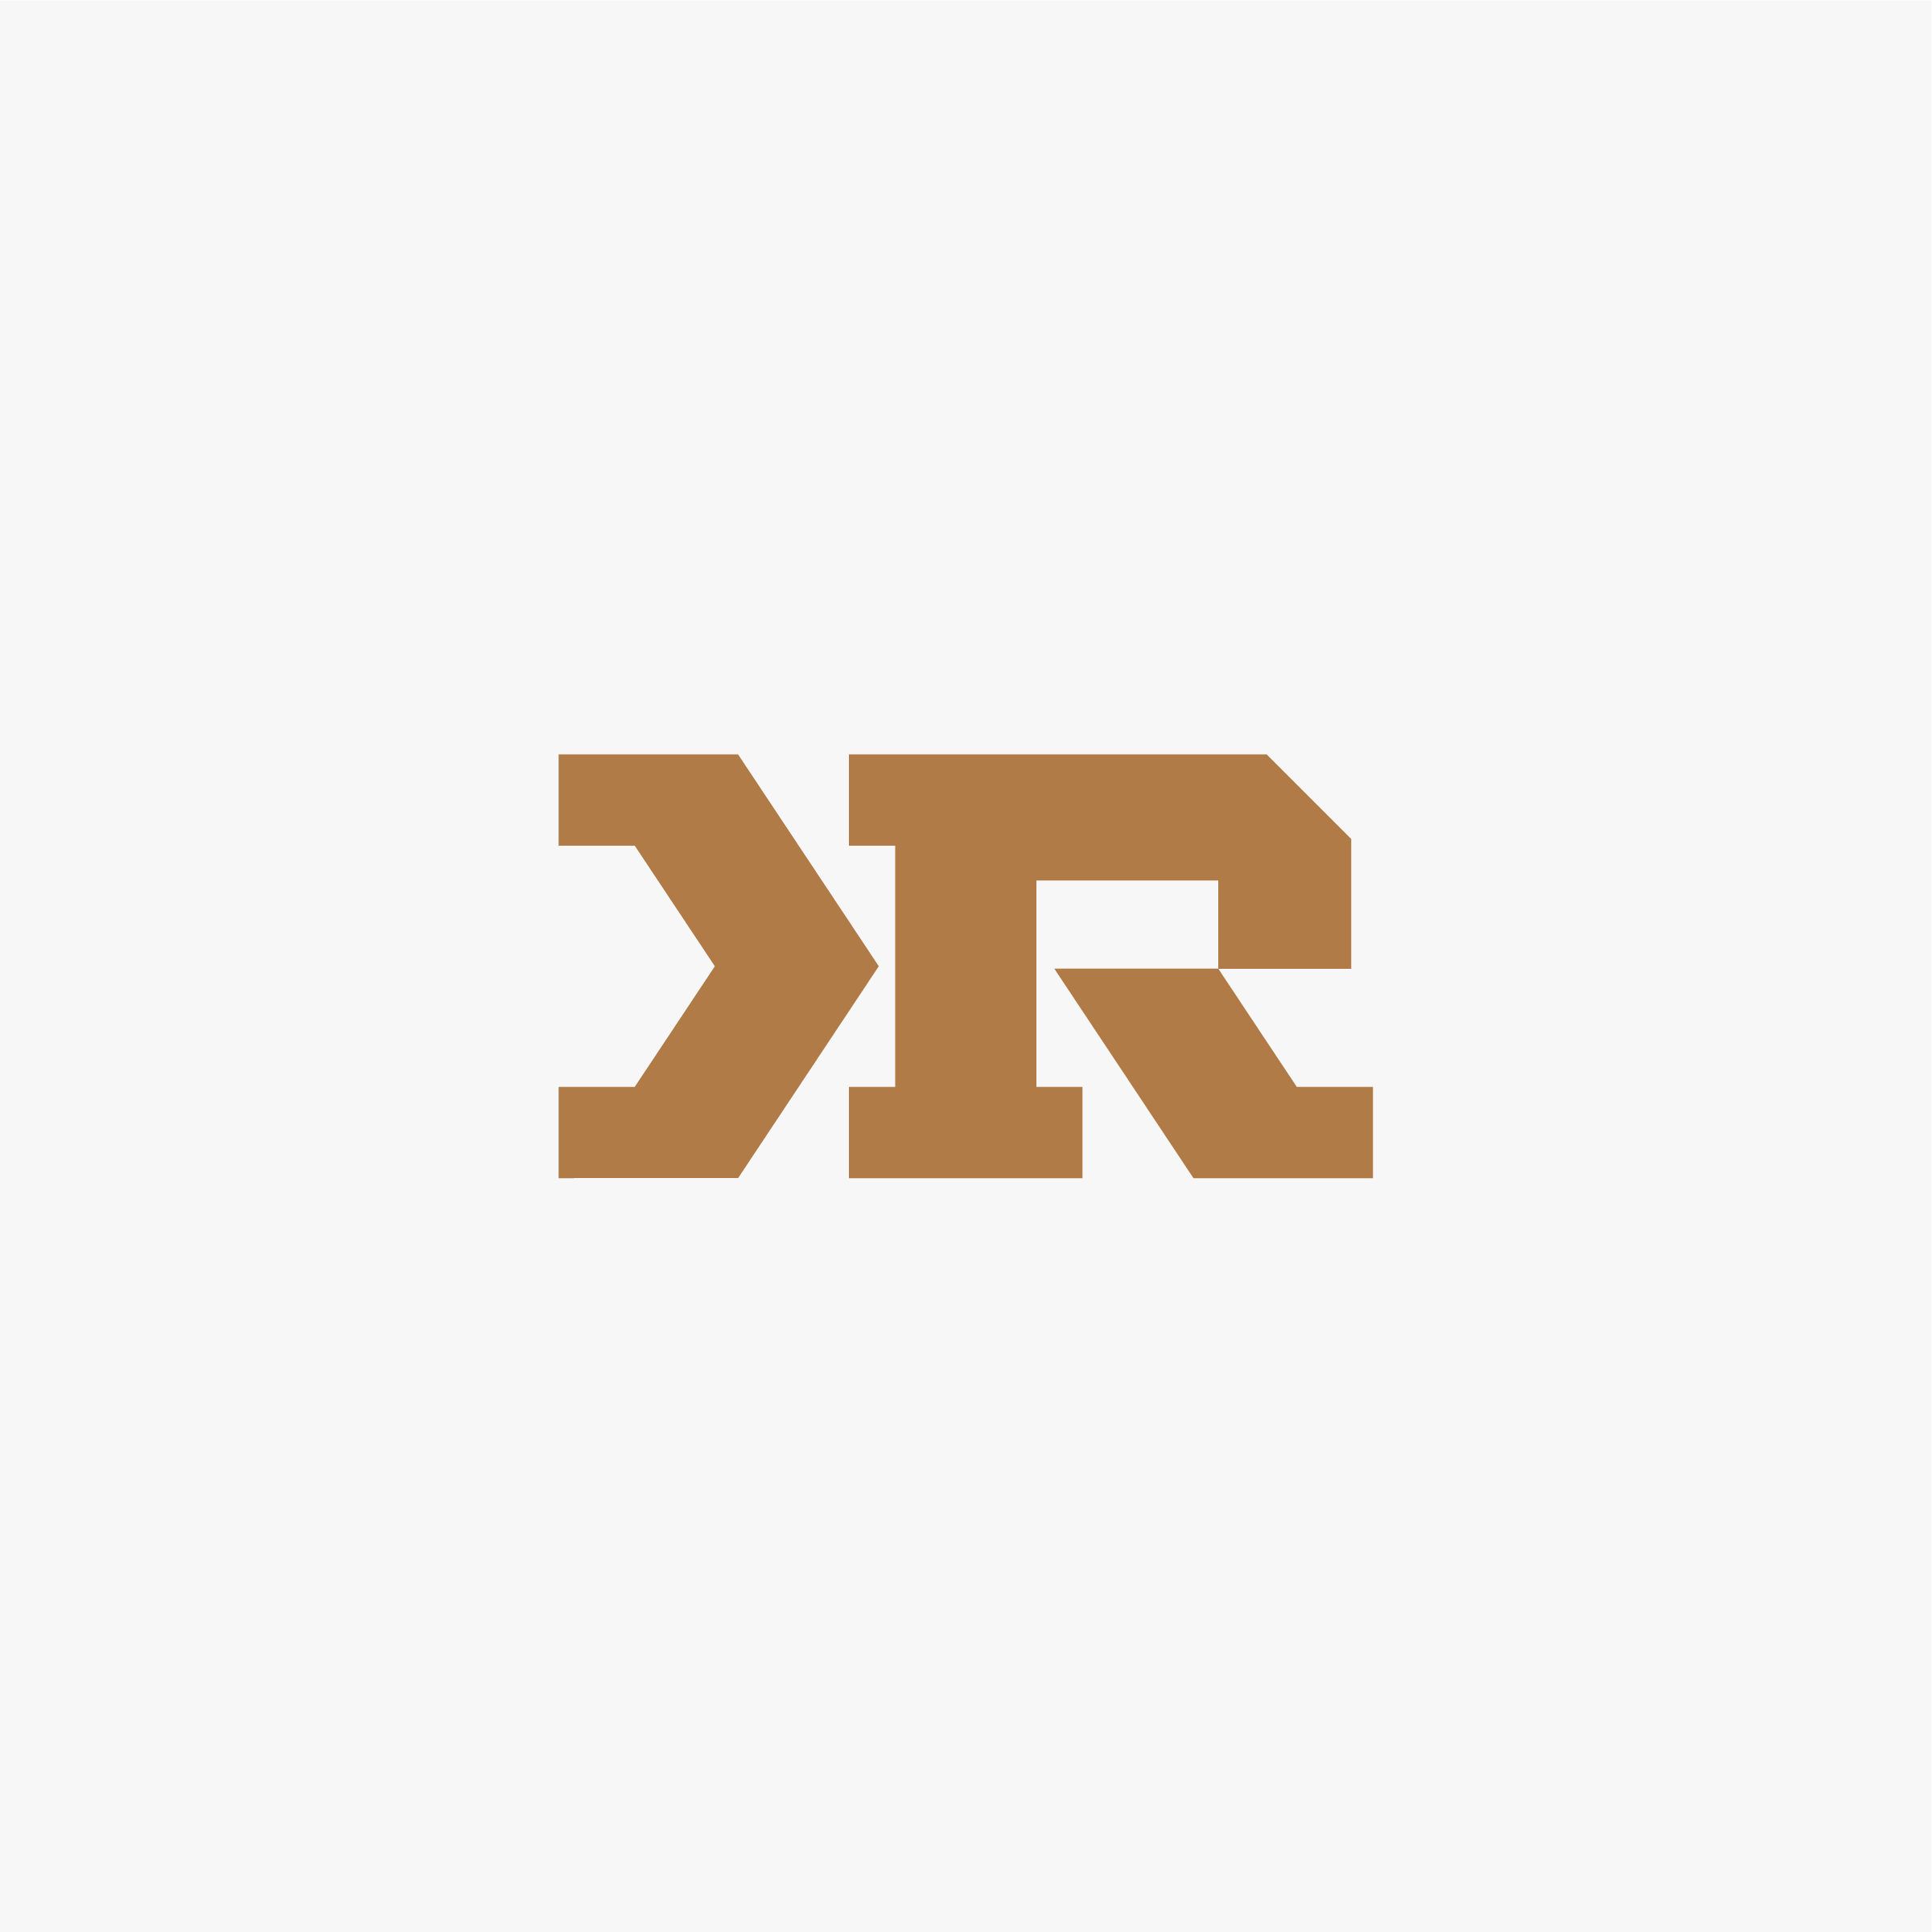 KR Monogram logo design by logo designer Mirka Studios for your inspiration and for the worlds largest logo competition